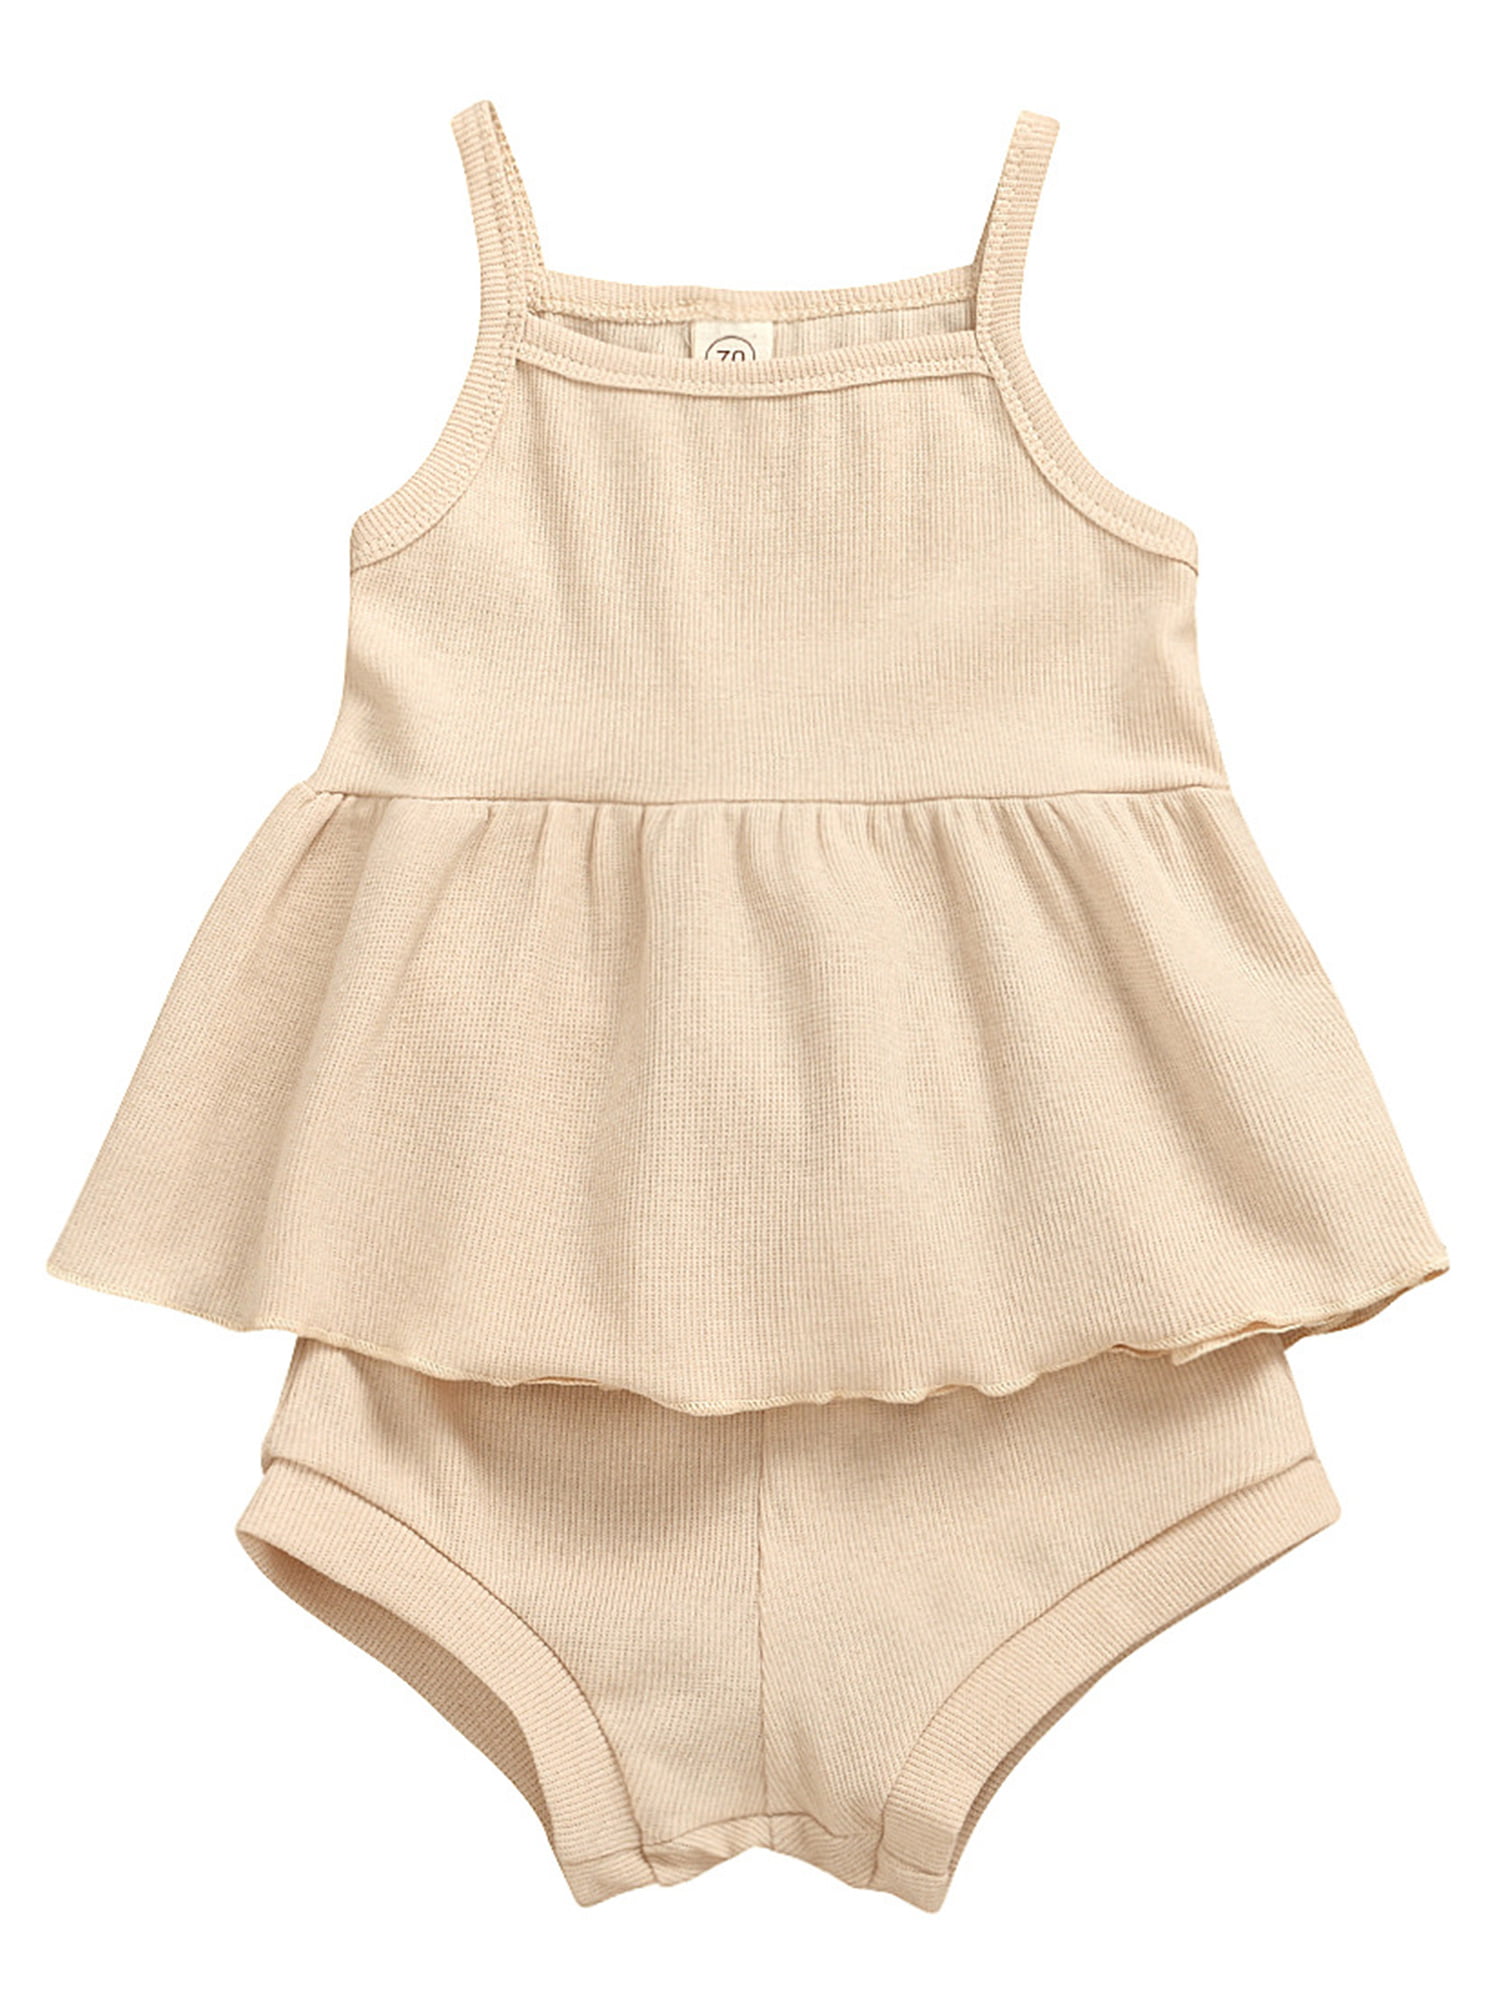 Newborn Baby Girls Summer Clothes Short Sleeve Ruffle T-Shirt Tops Drawstring Shorts Sets Infant Outfit